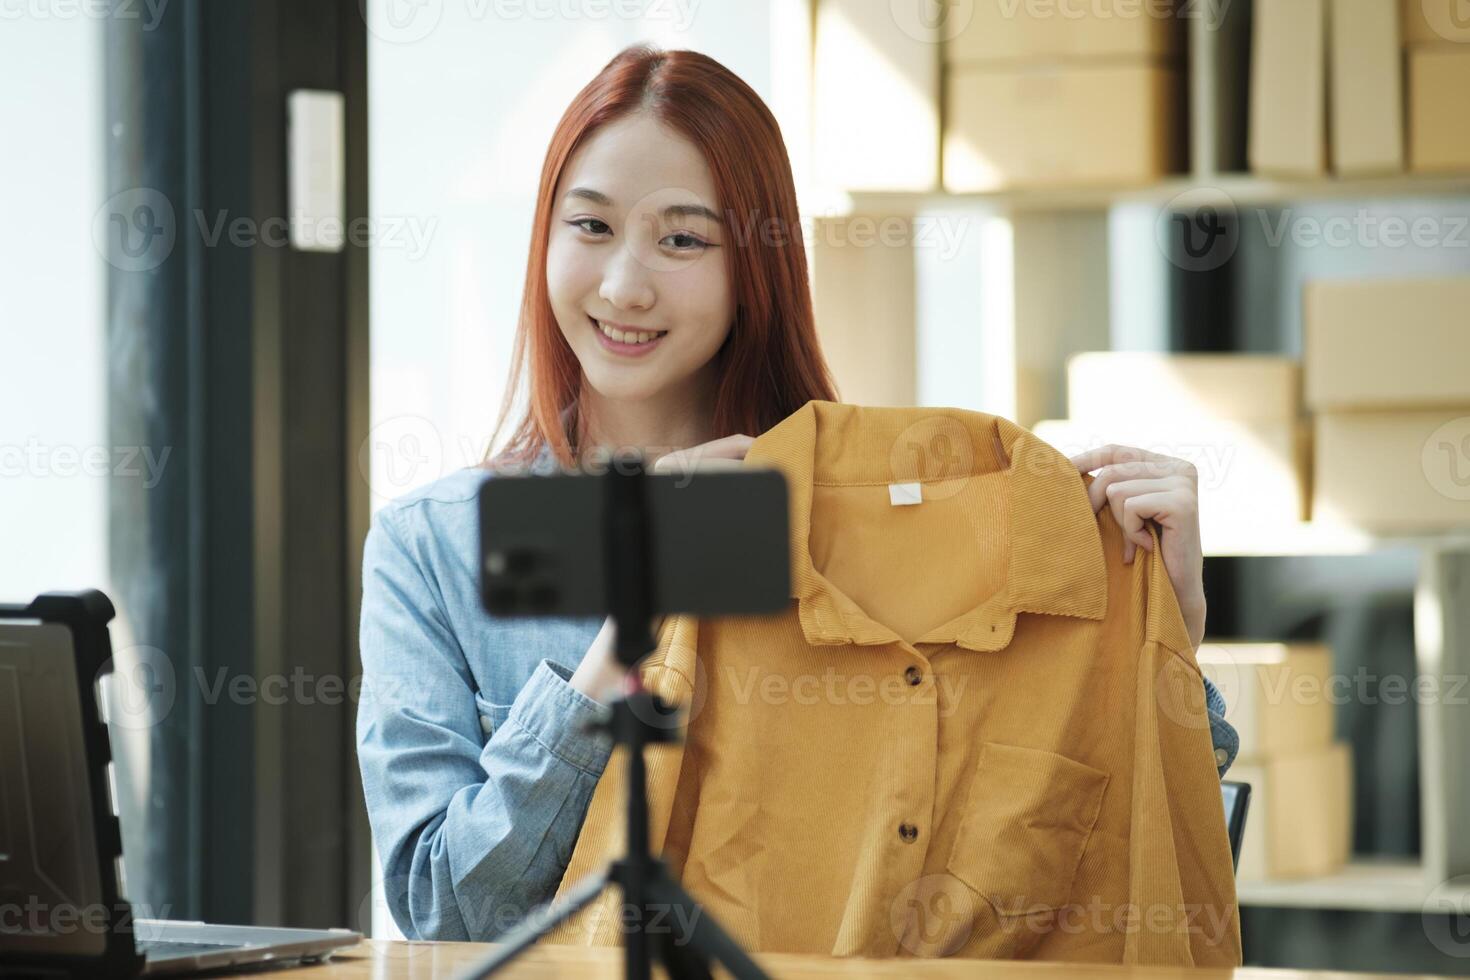 Entrepreneur Showcasing Clothes for Online Store photo